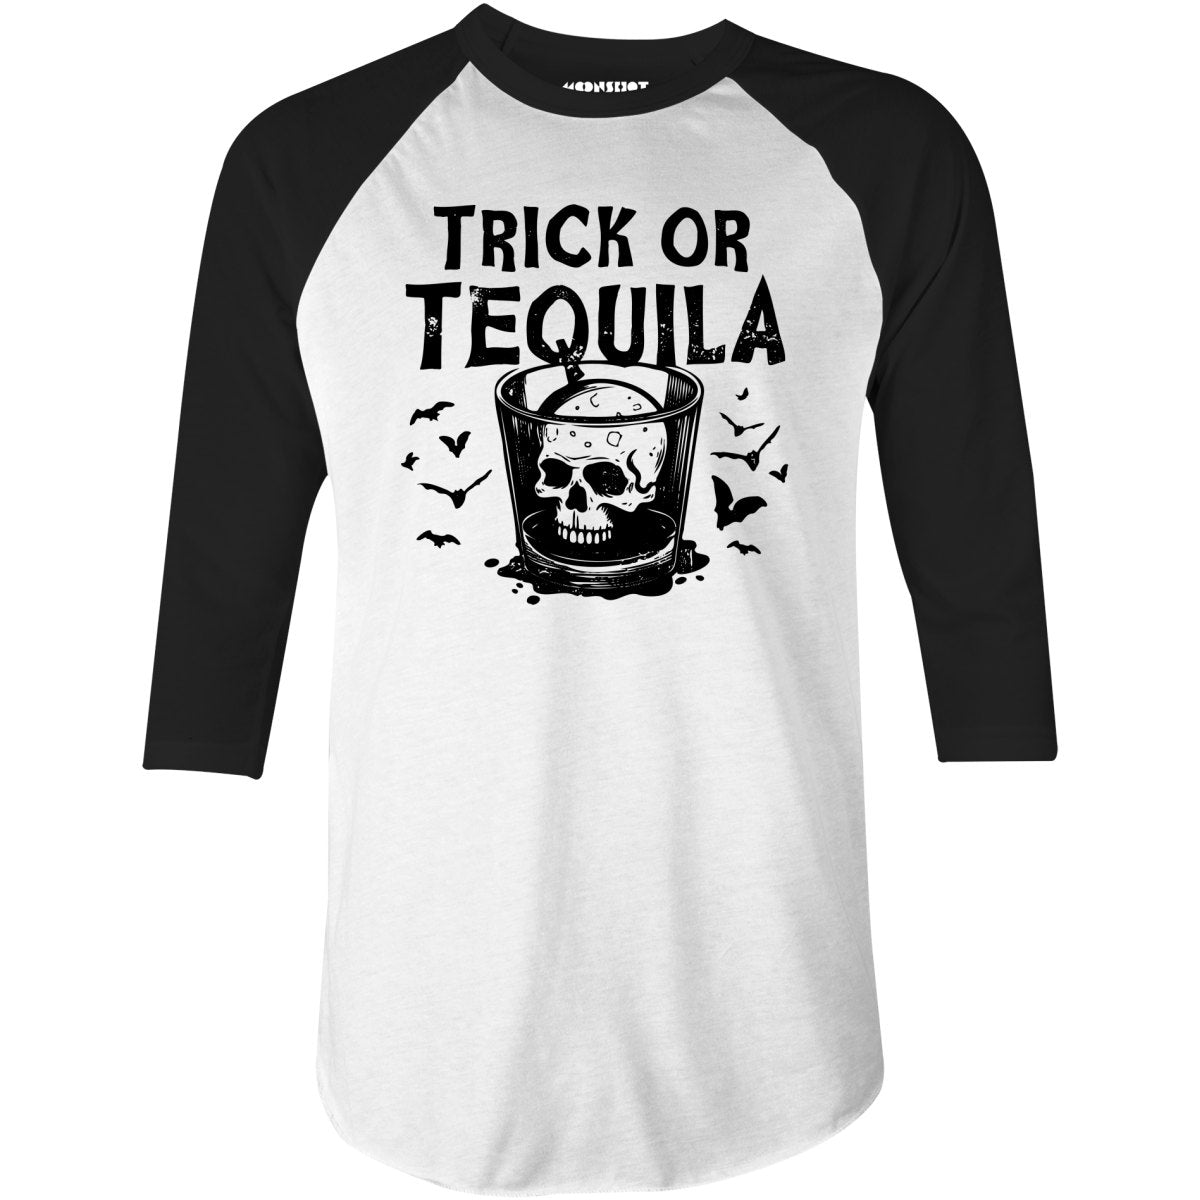 Trick or Tequila - 3/4 Sleeve Raglan T-Shirt